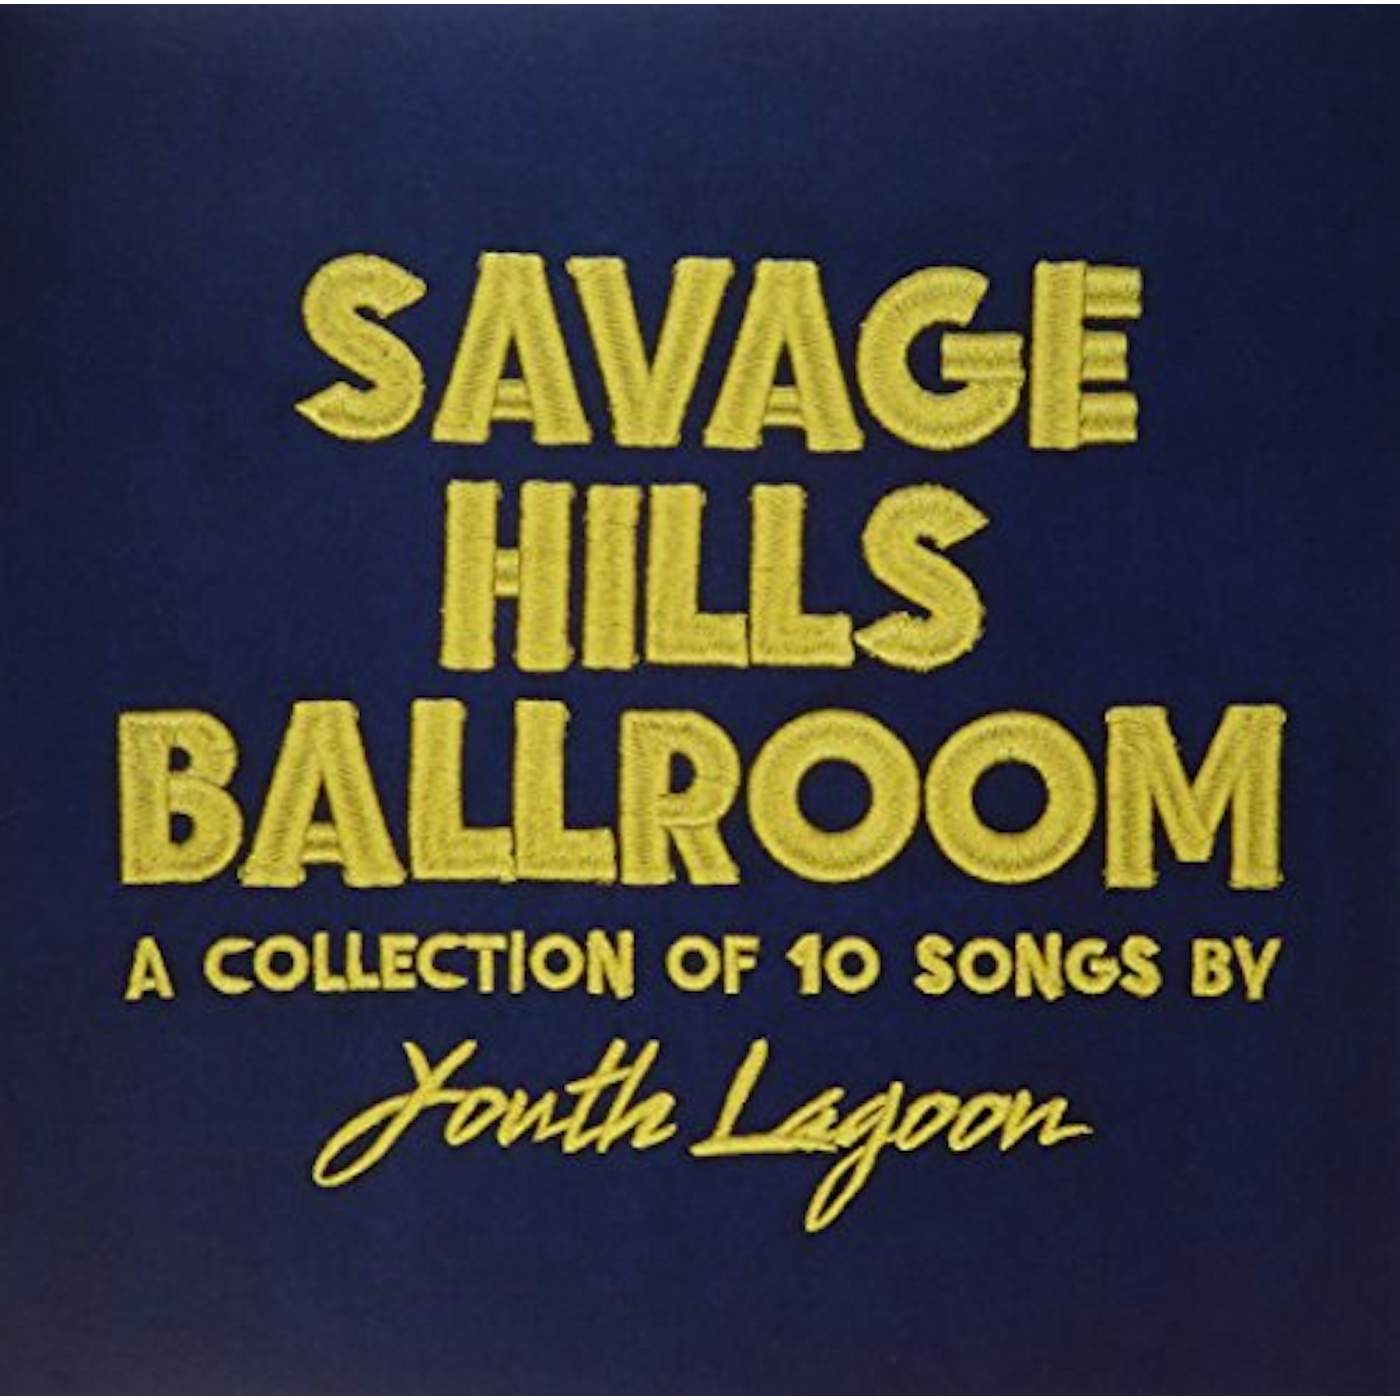 Youth Lagoon Savage Hills Ballroom Vinyl Record